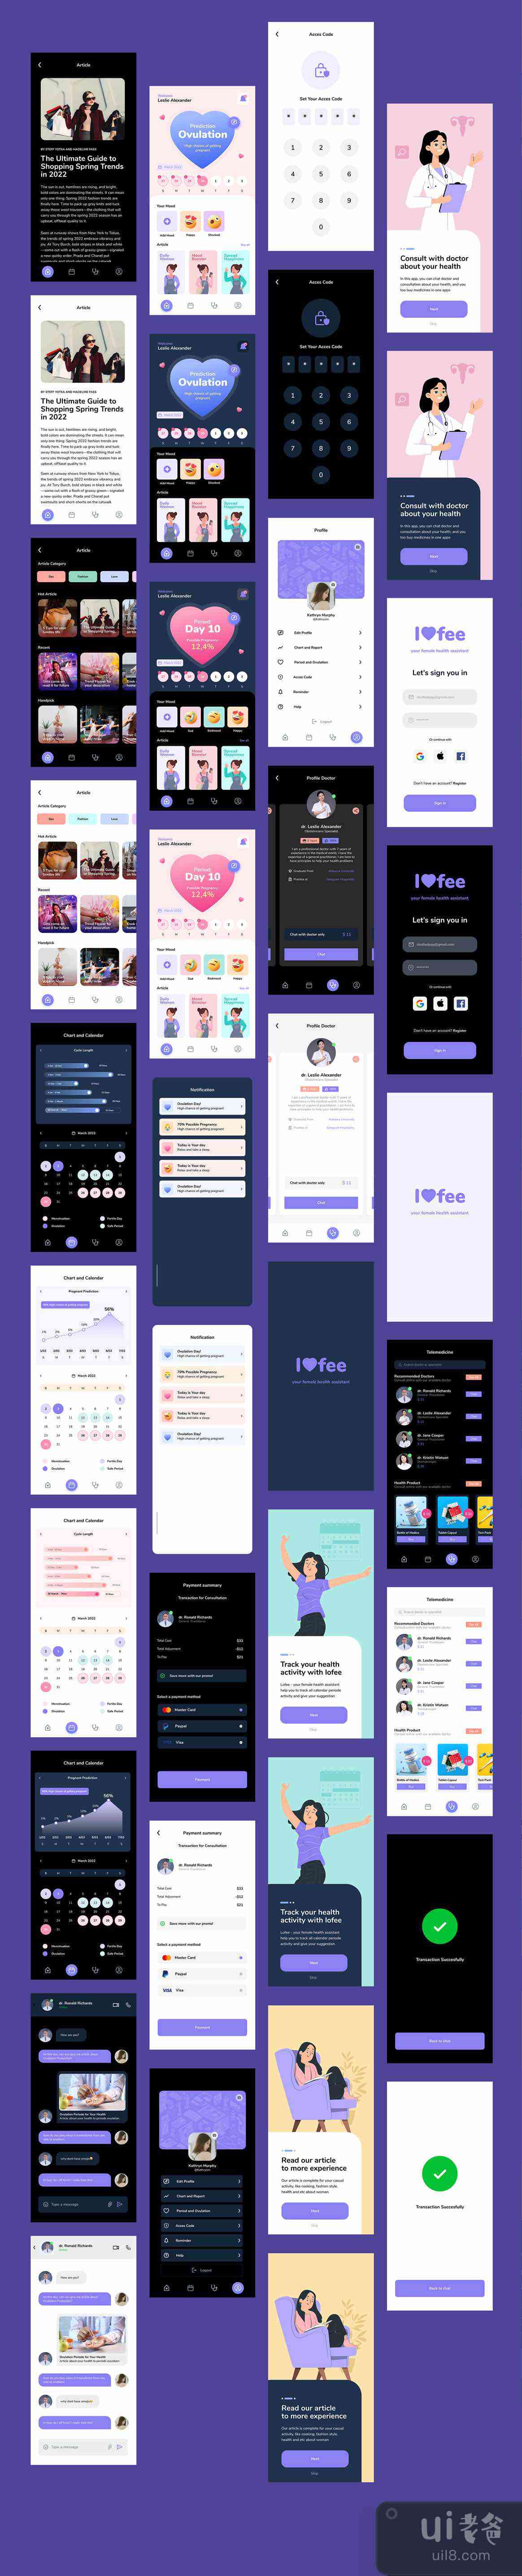 Lofee - 女性健康用户界面移动设计套件 (Lofee - Woman Health UI Mobile Design Kit)插图